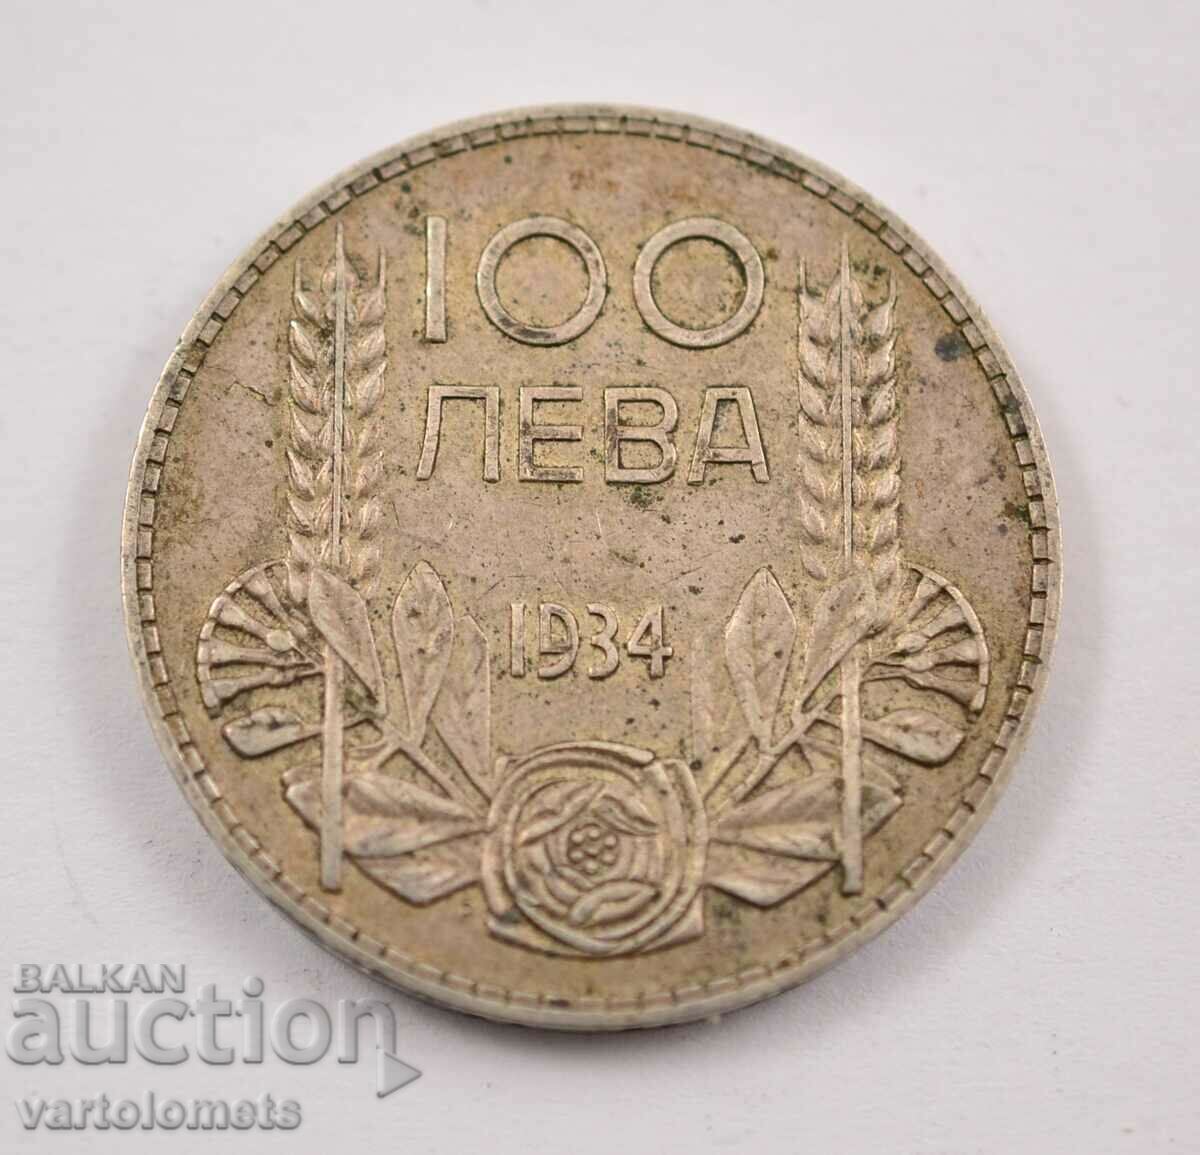 BGN 100 1934 - Bulgaria